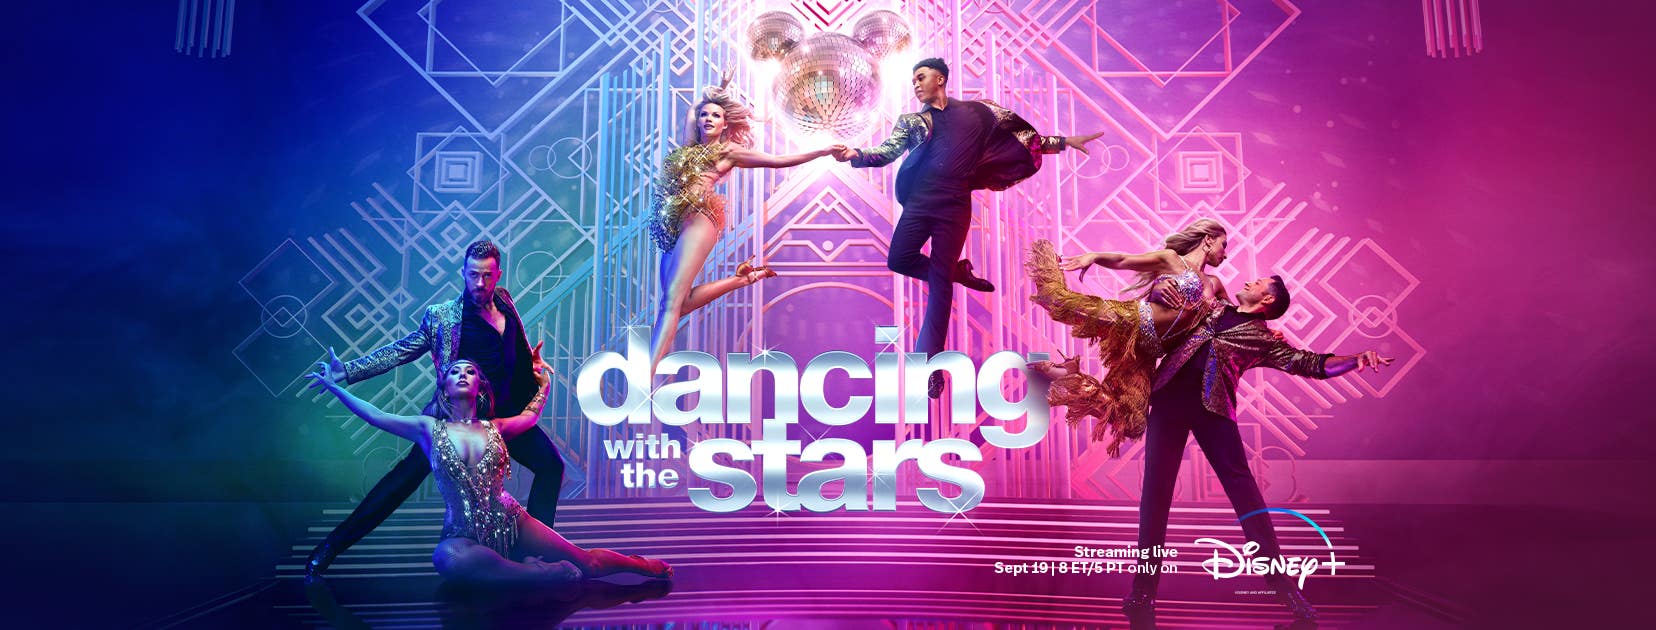 "Dancing With the Stars" Season 31